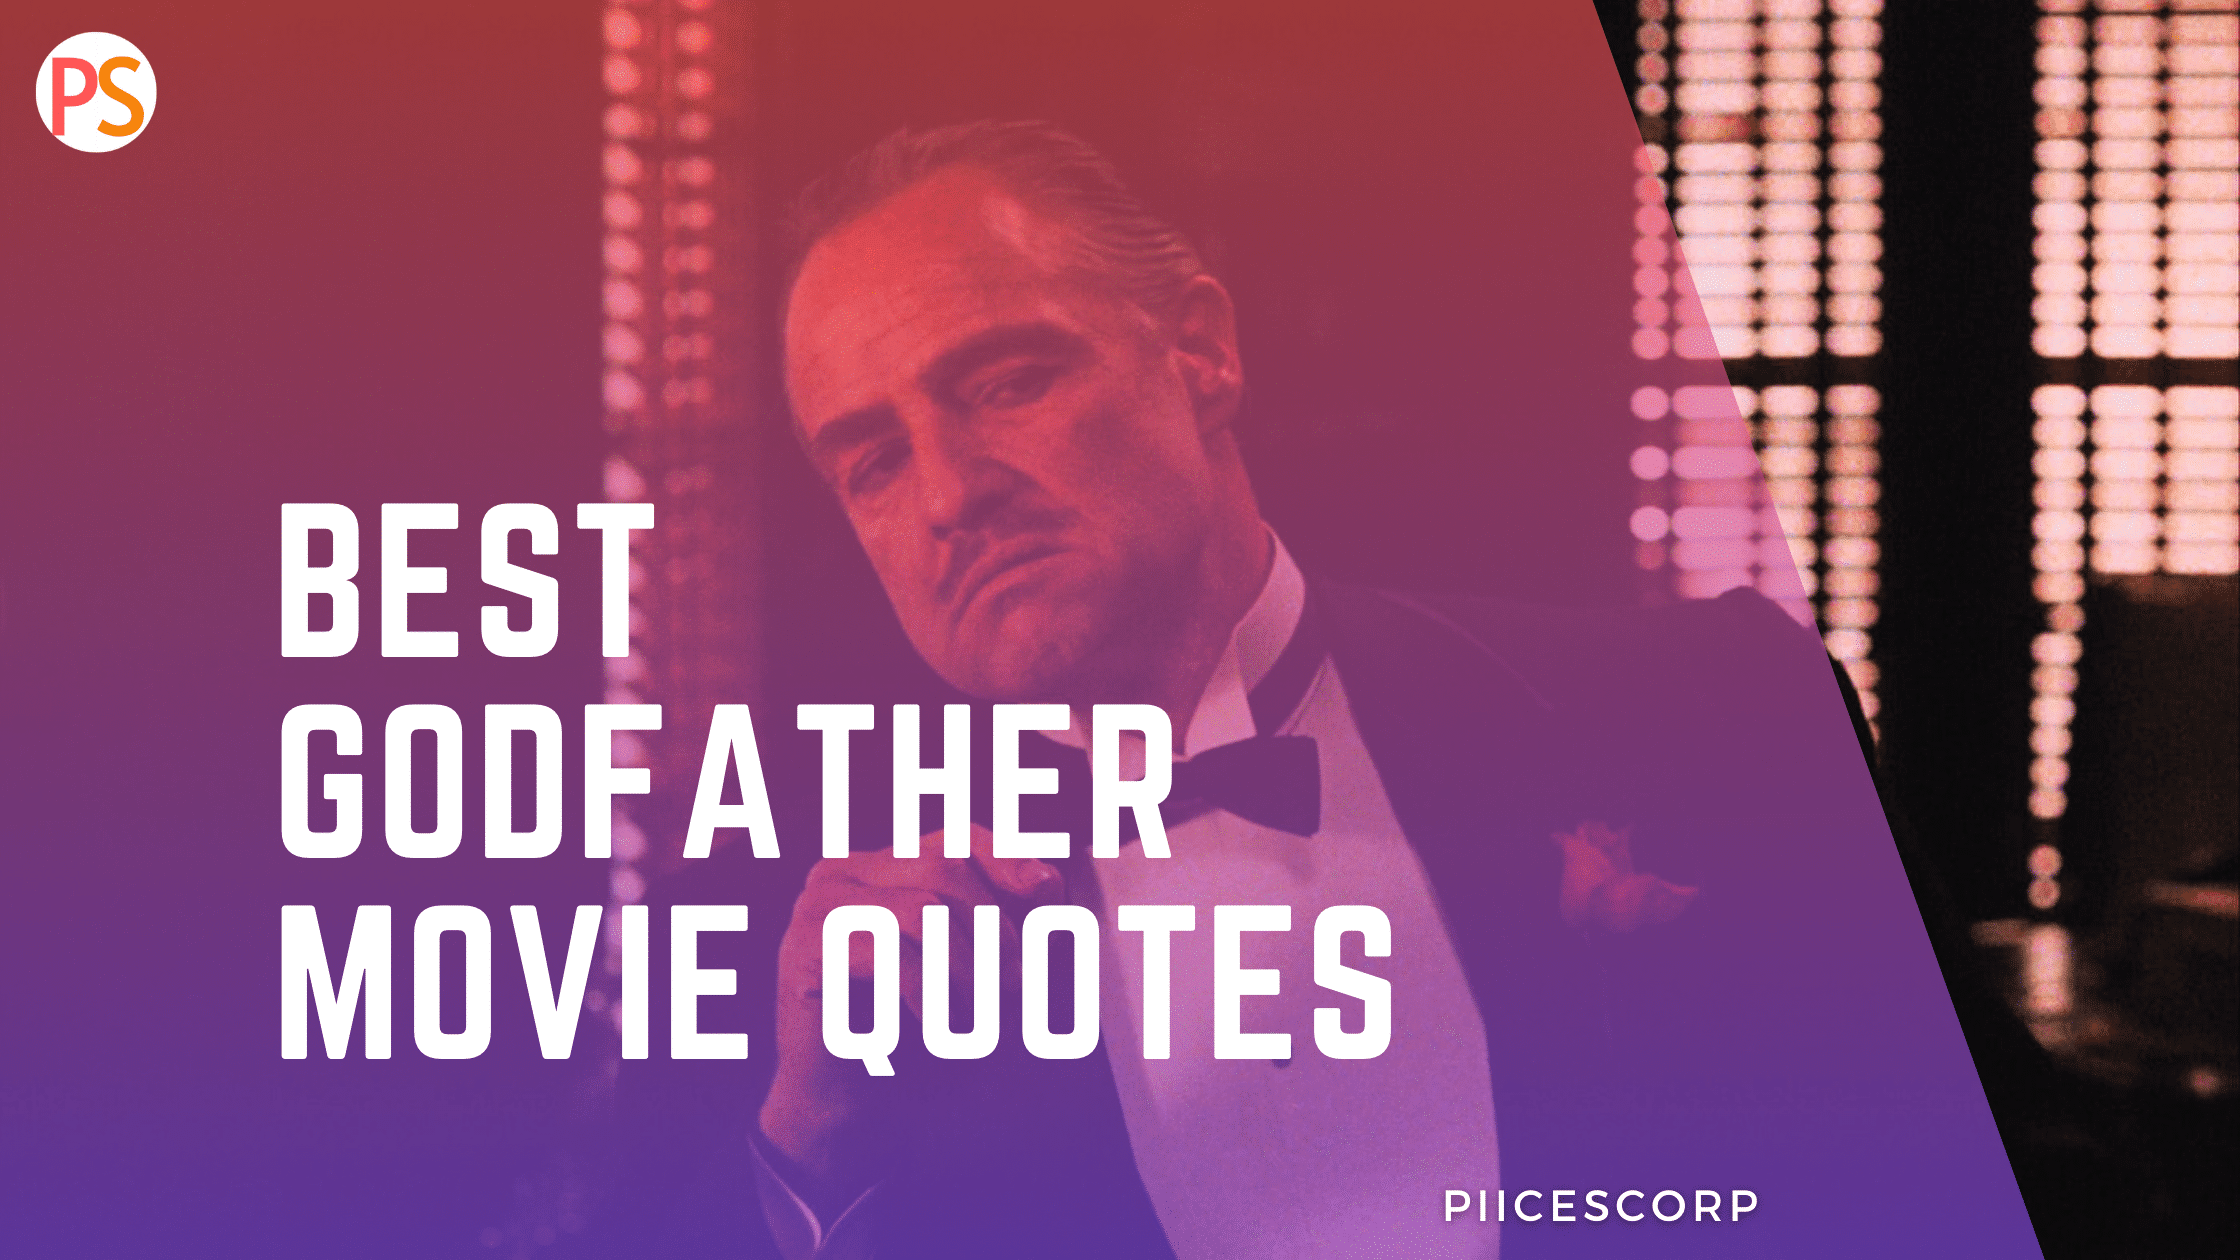 Godfather movie quotes